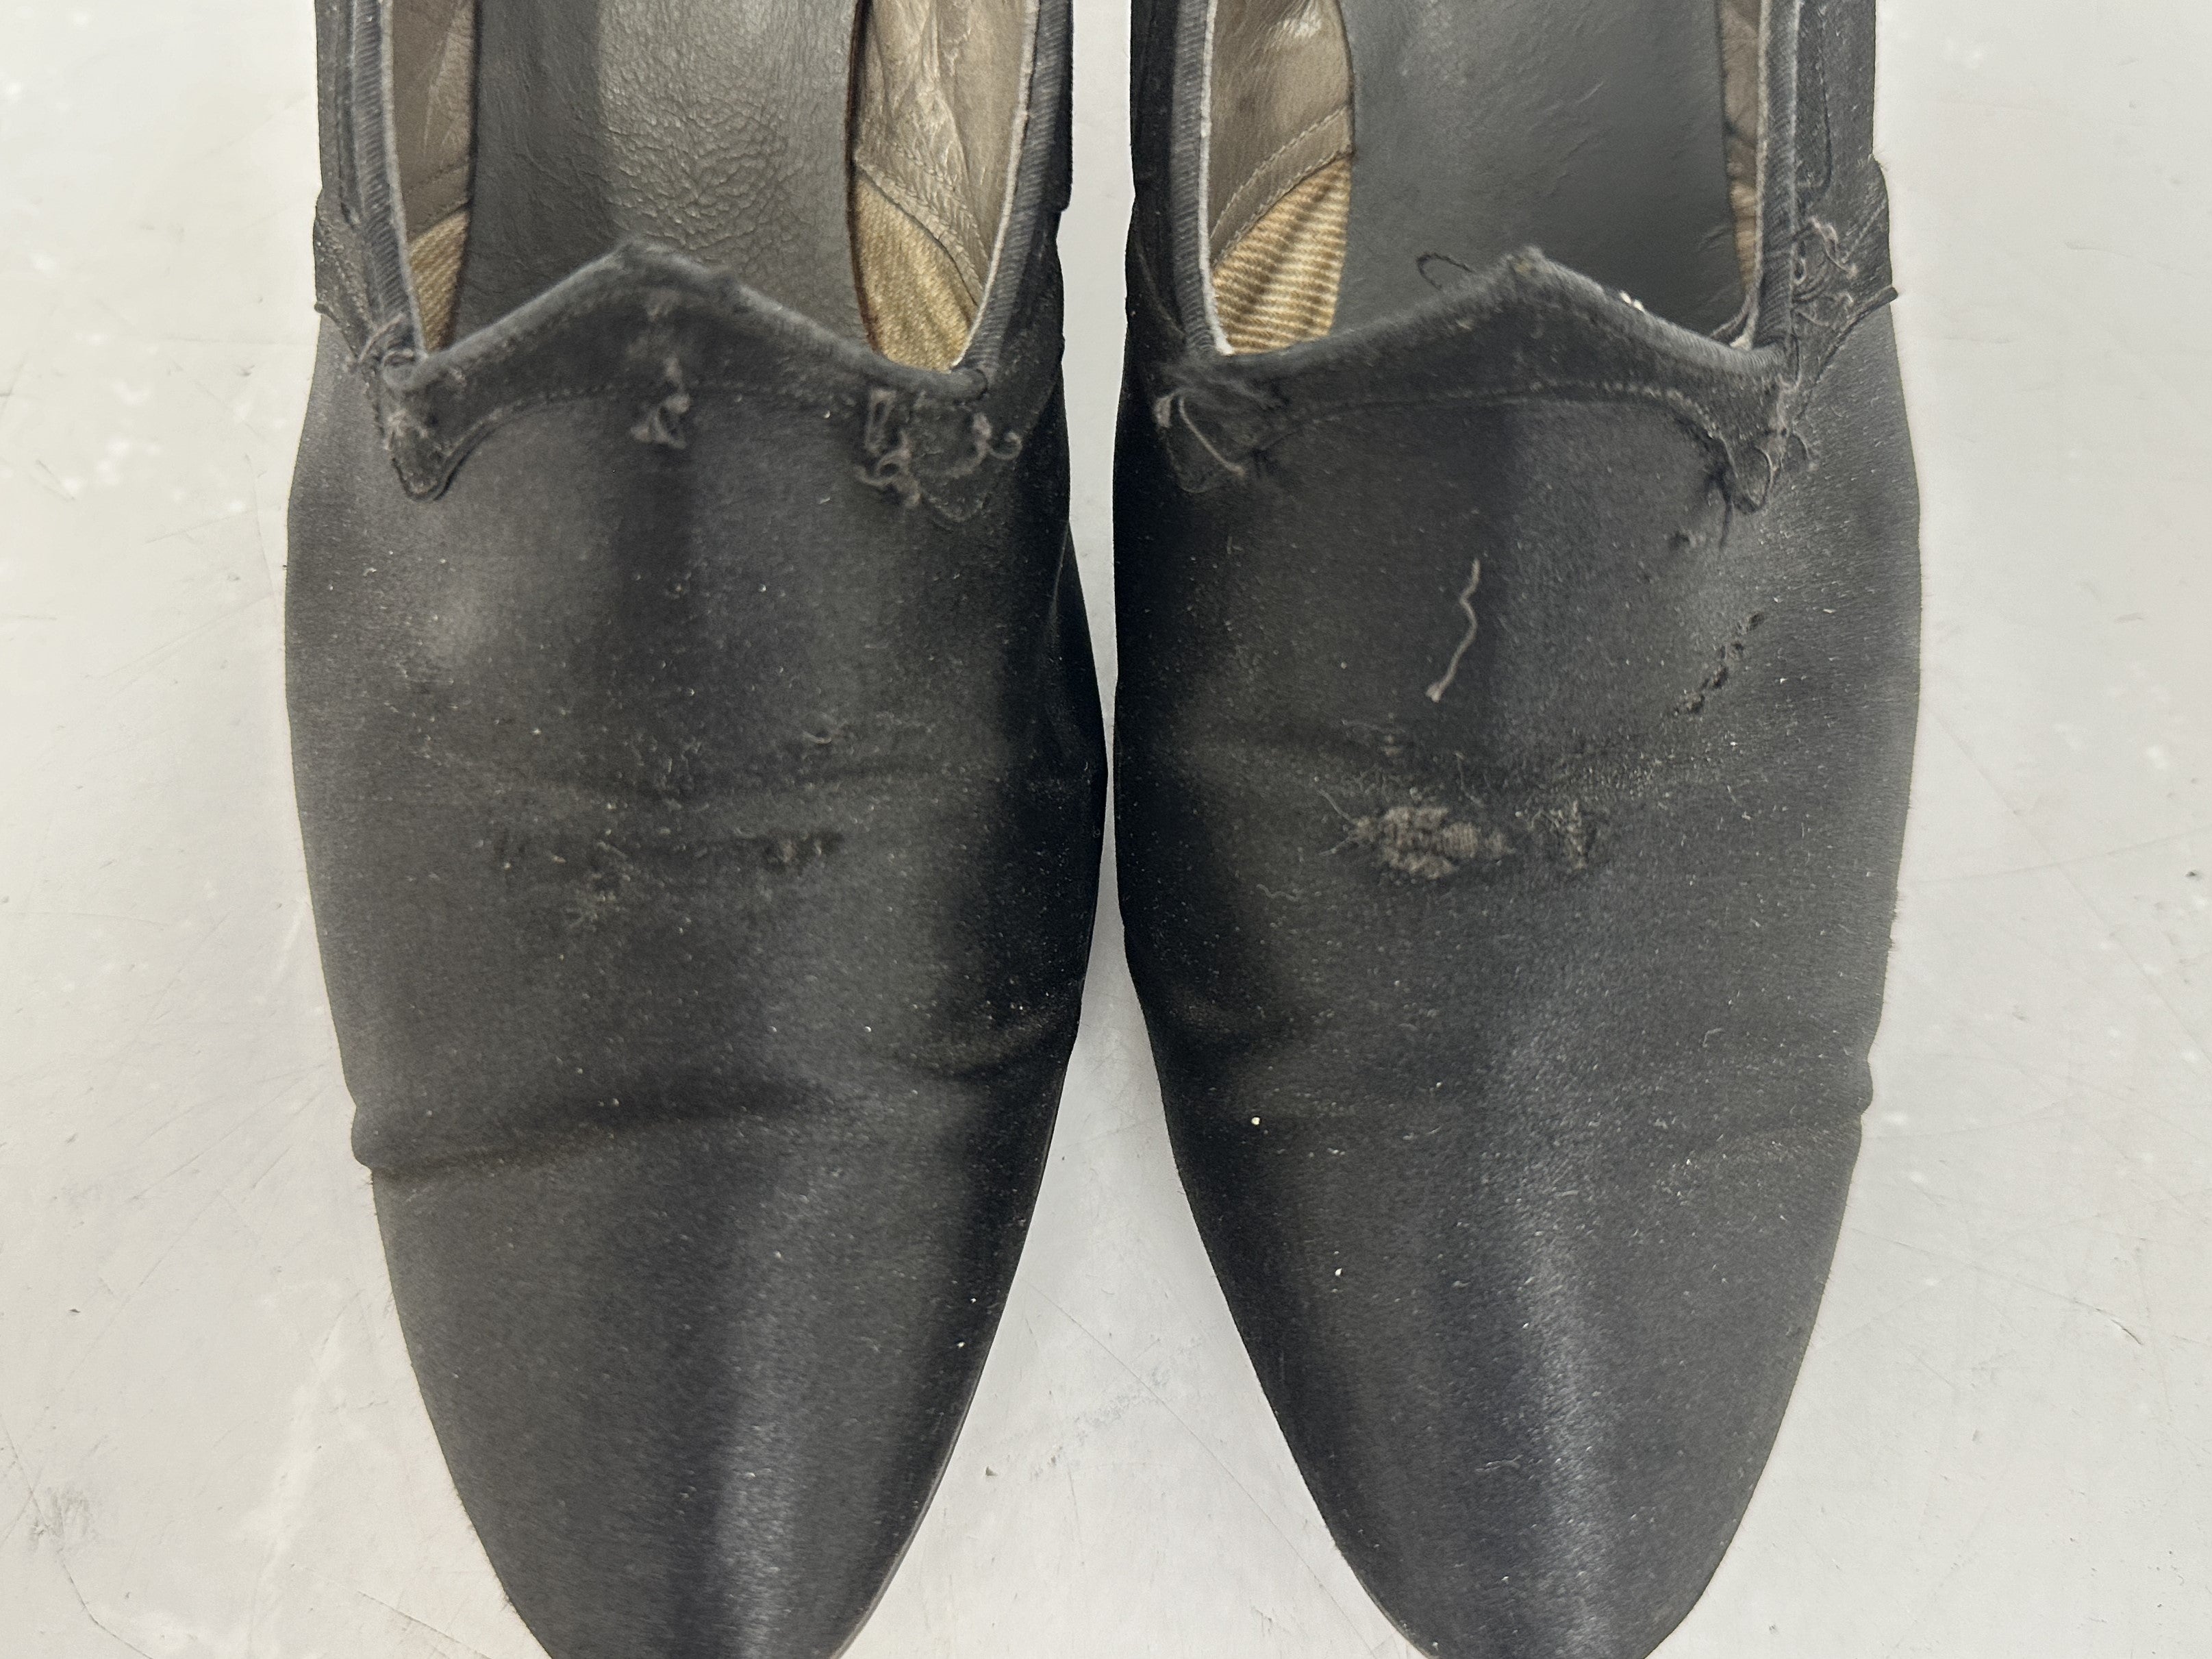 Vintage Black Satin Walk Over Shoes Women's Size 8-8.5